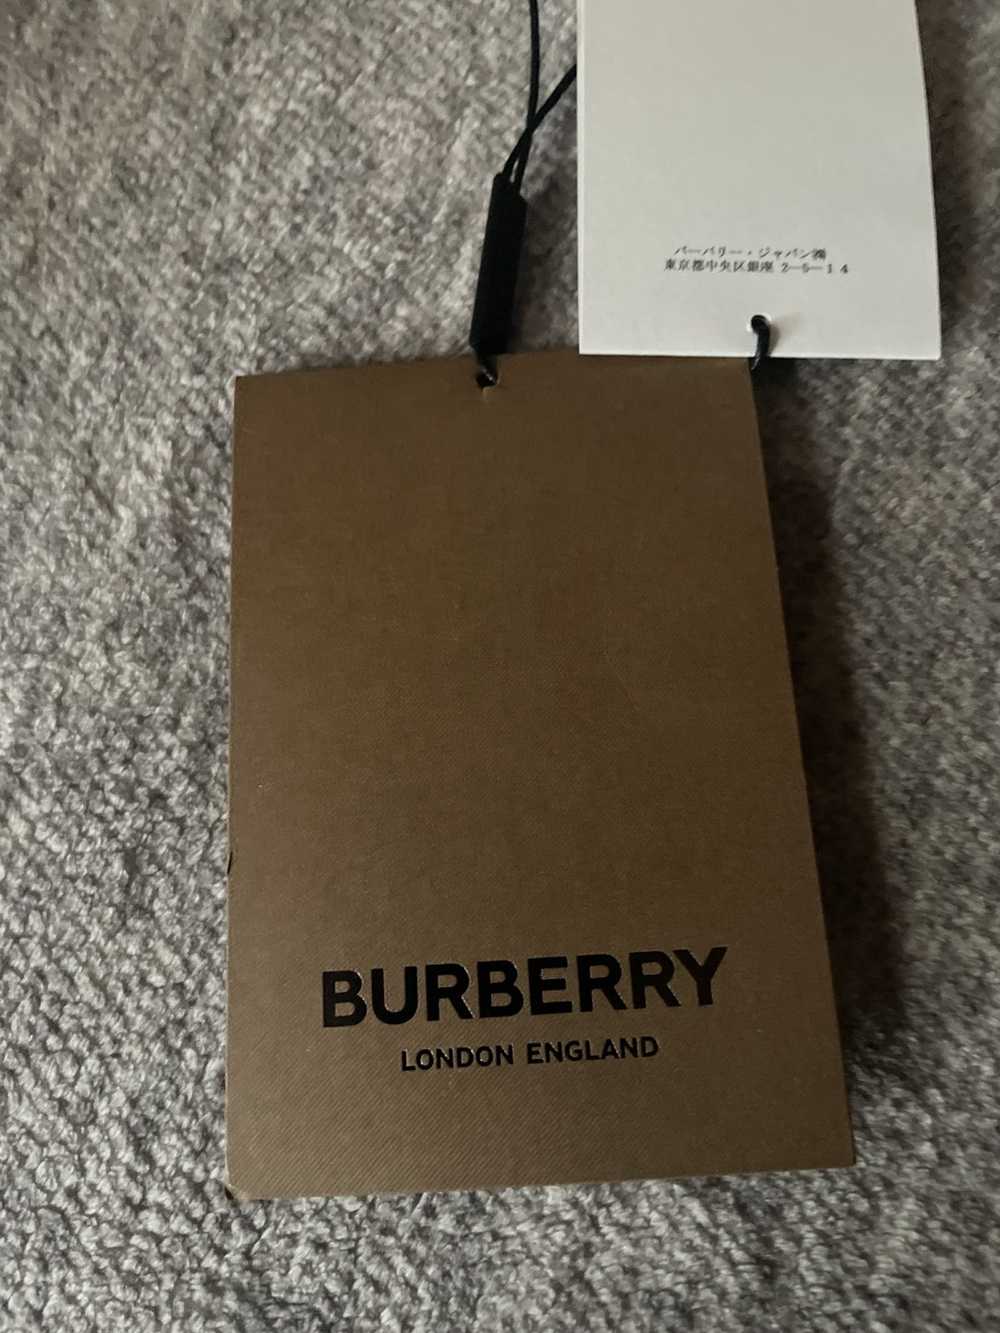 Burberry Burberry London England shirt - image 3